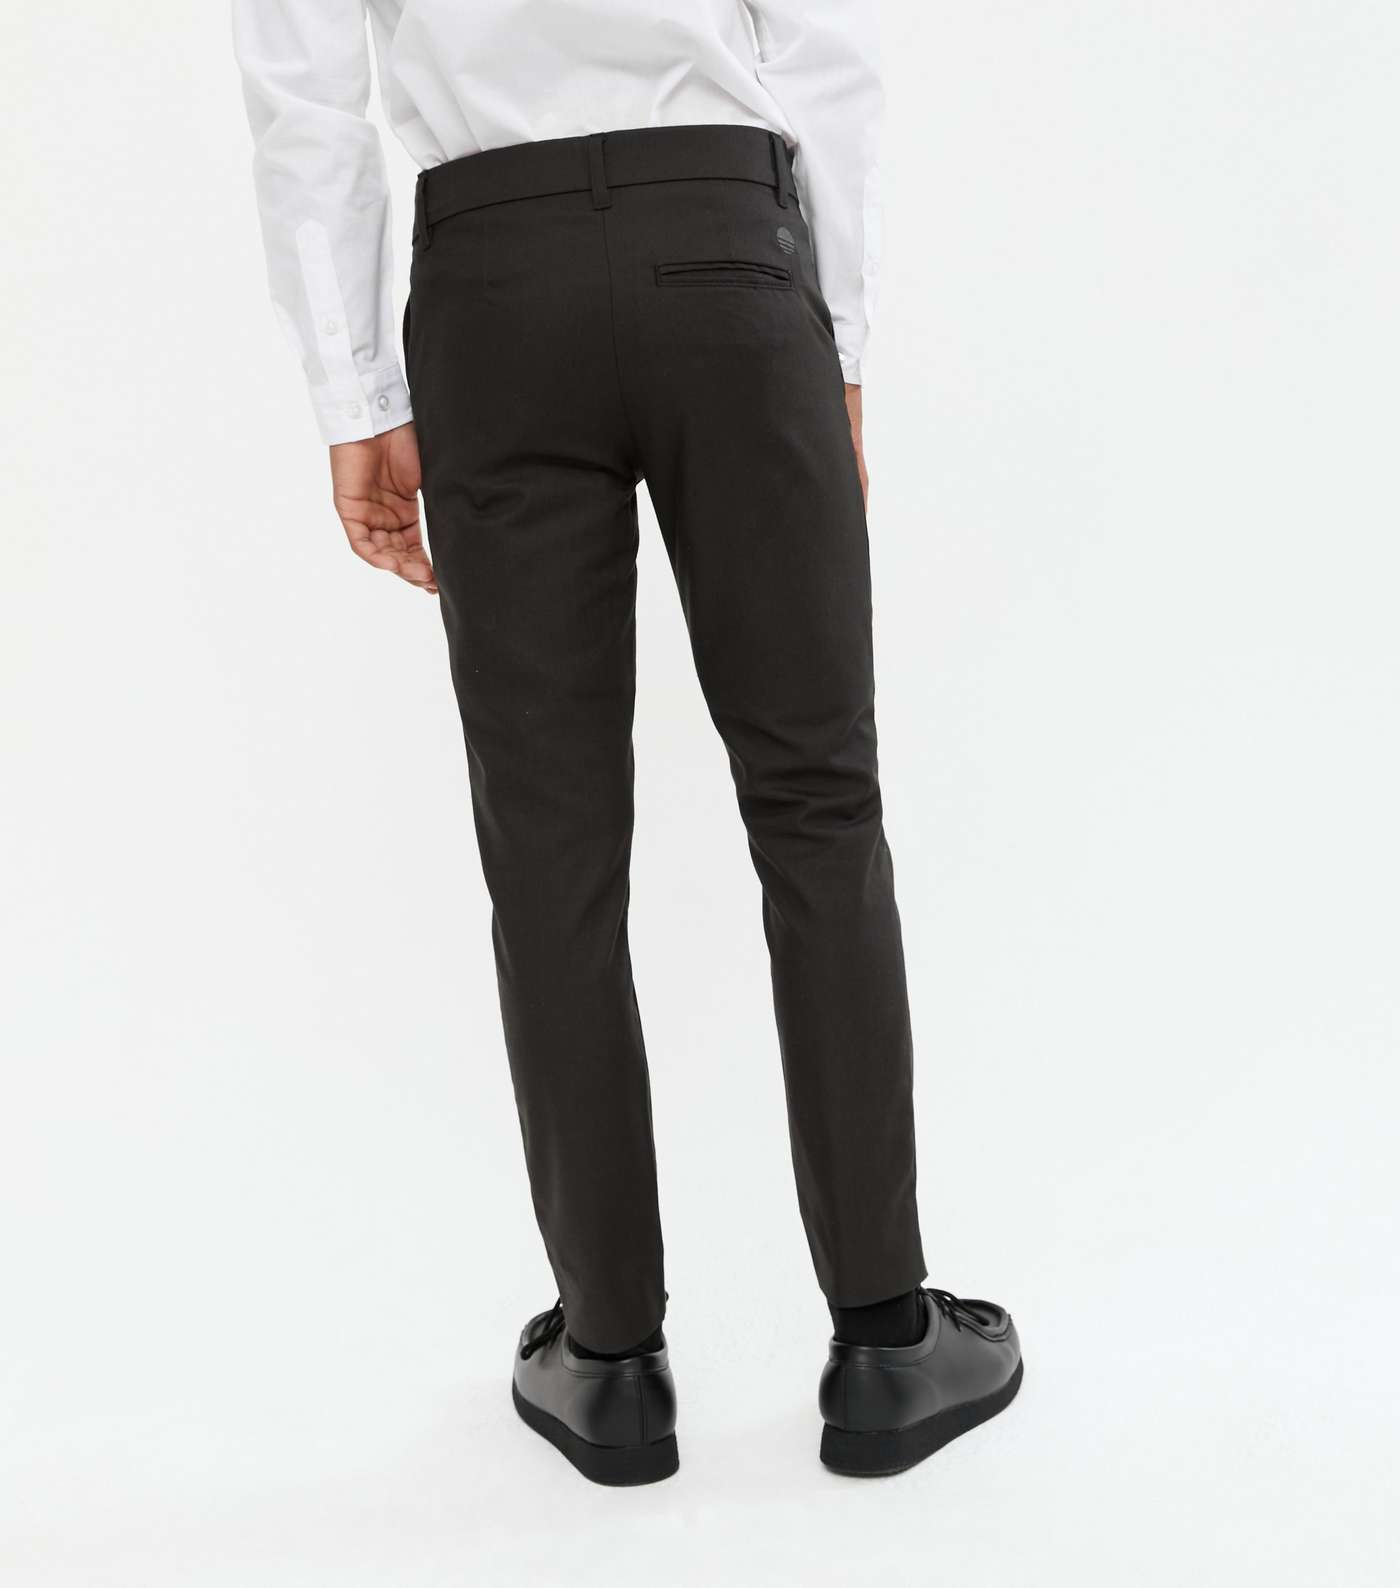 Boys Dark Grey Skinny Fit Trousers Image 4